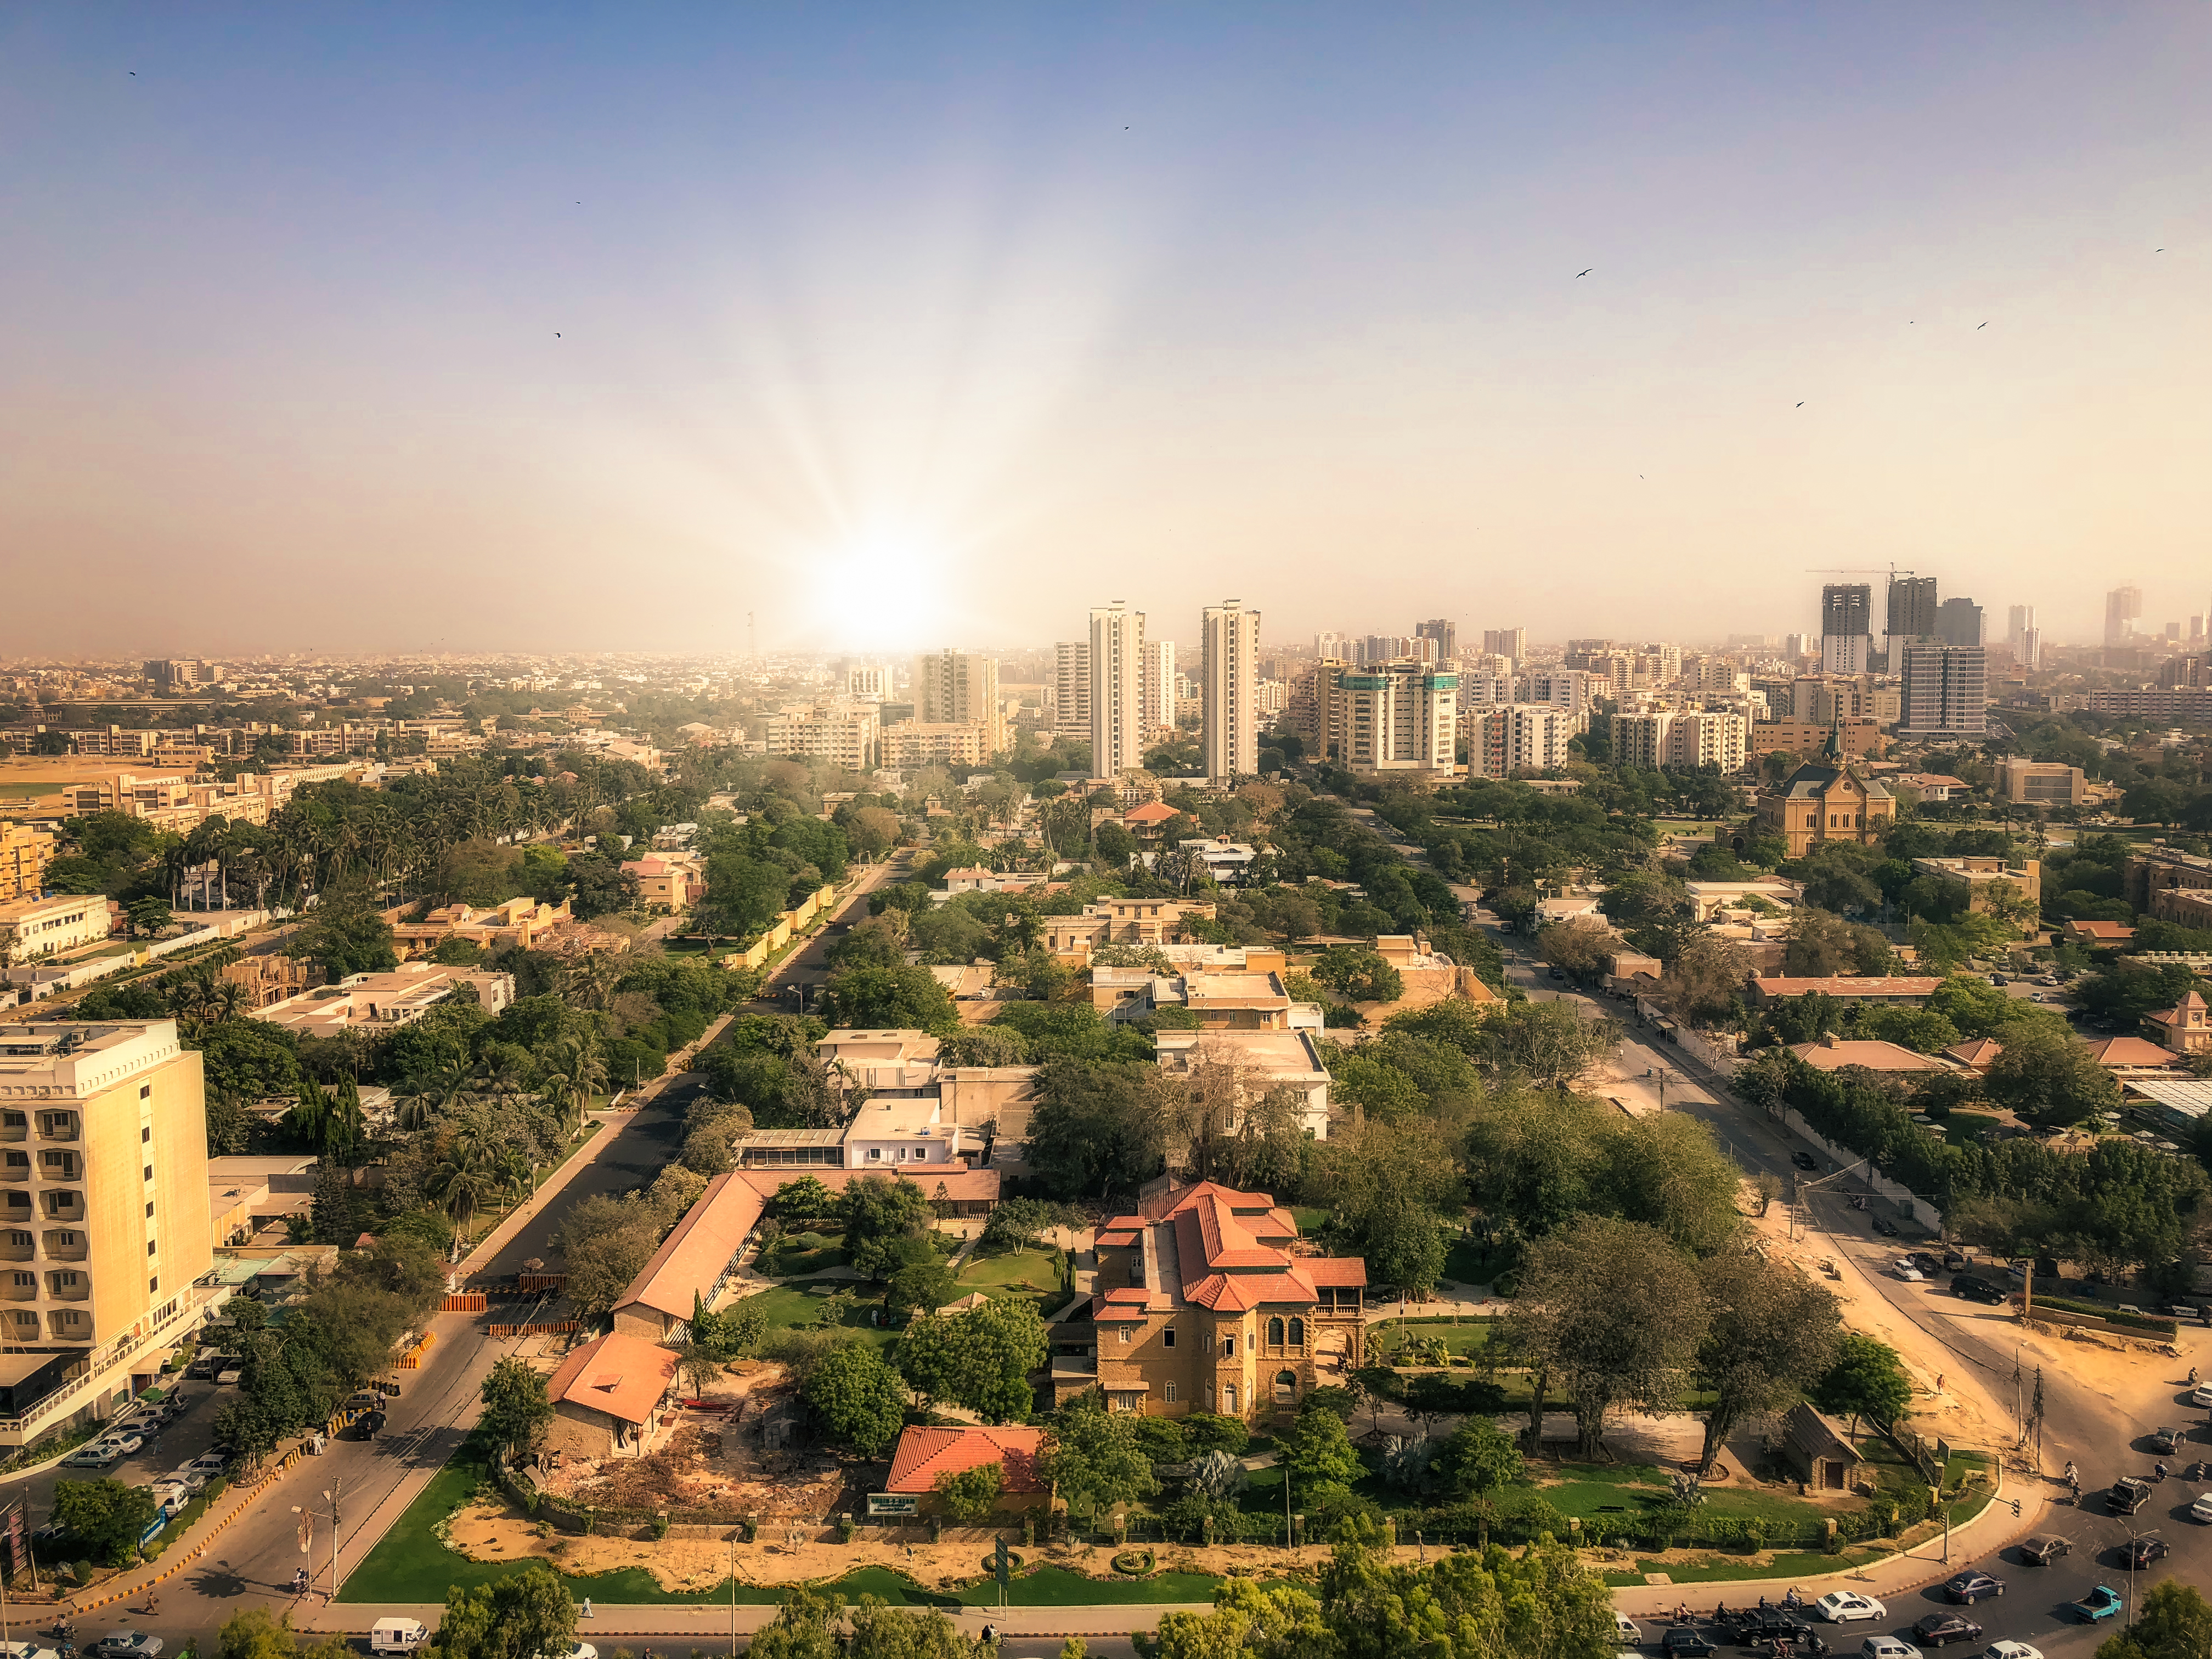 Image of the Karachi, Pakistan, skyline.